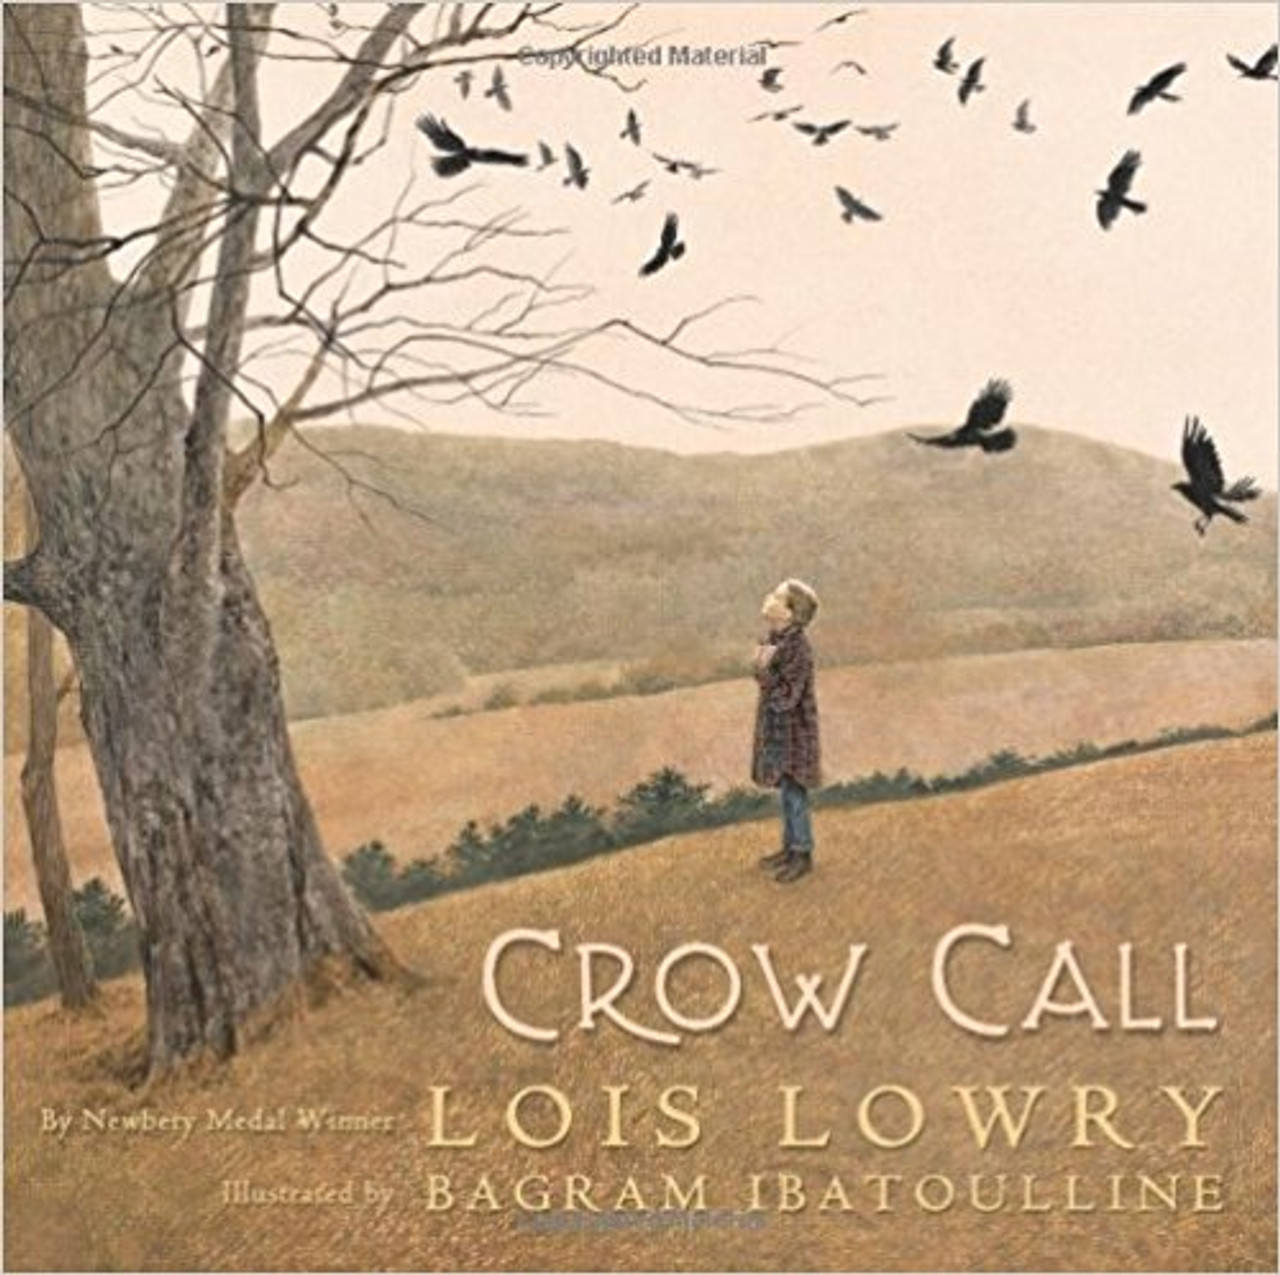 Crow Call by Lois Lowry